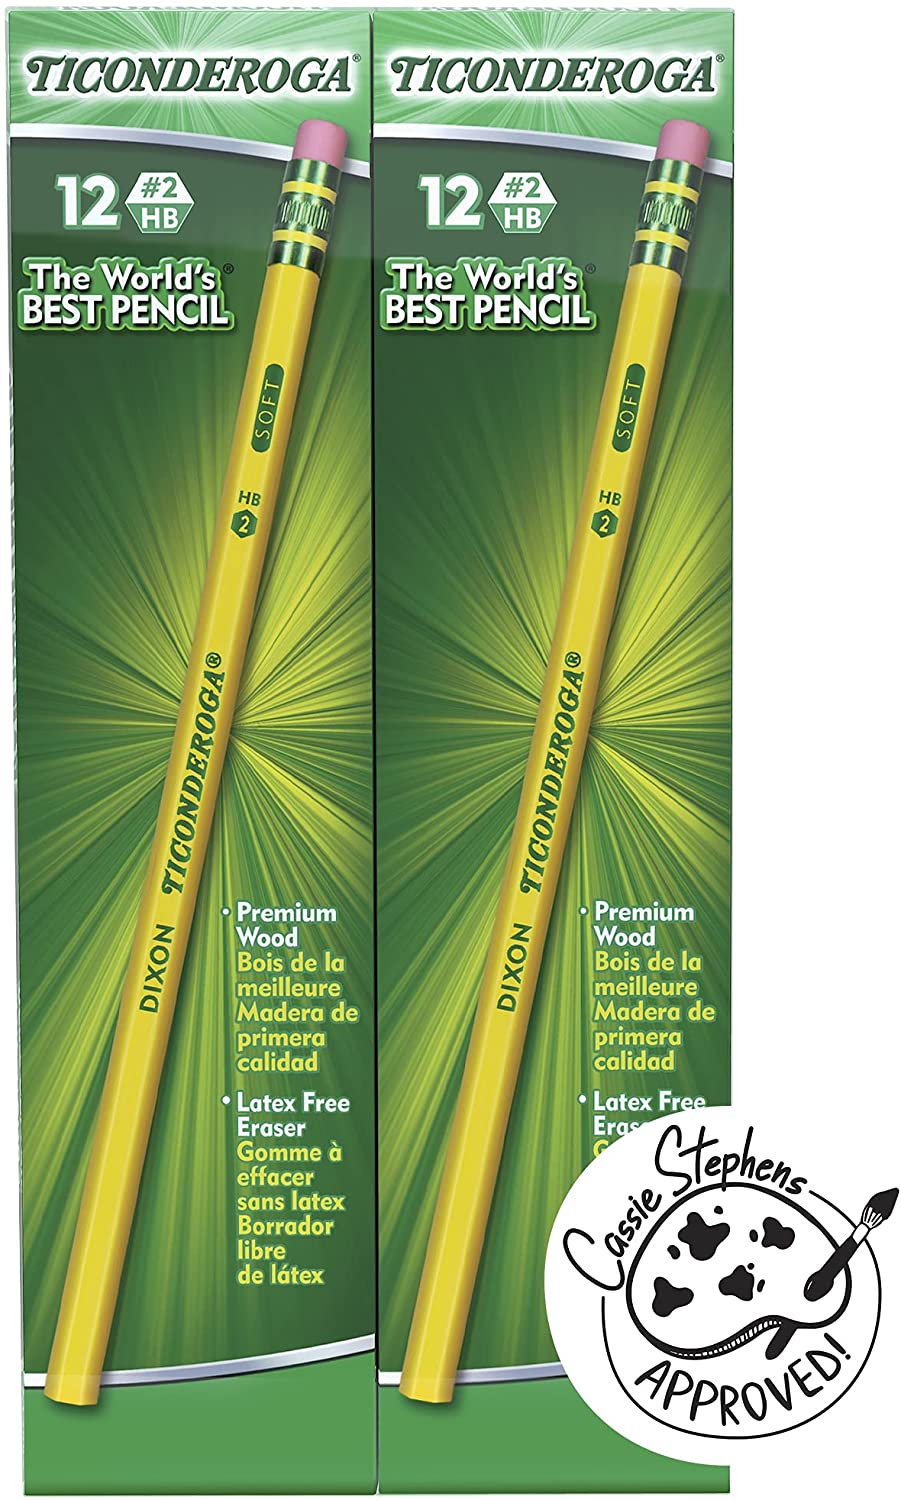 TICONDEROGA Pencils, Wood-Cased, Unsharpened, Graphite #2 HB Soft, Yellow, 96-Pack $6.96